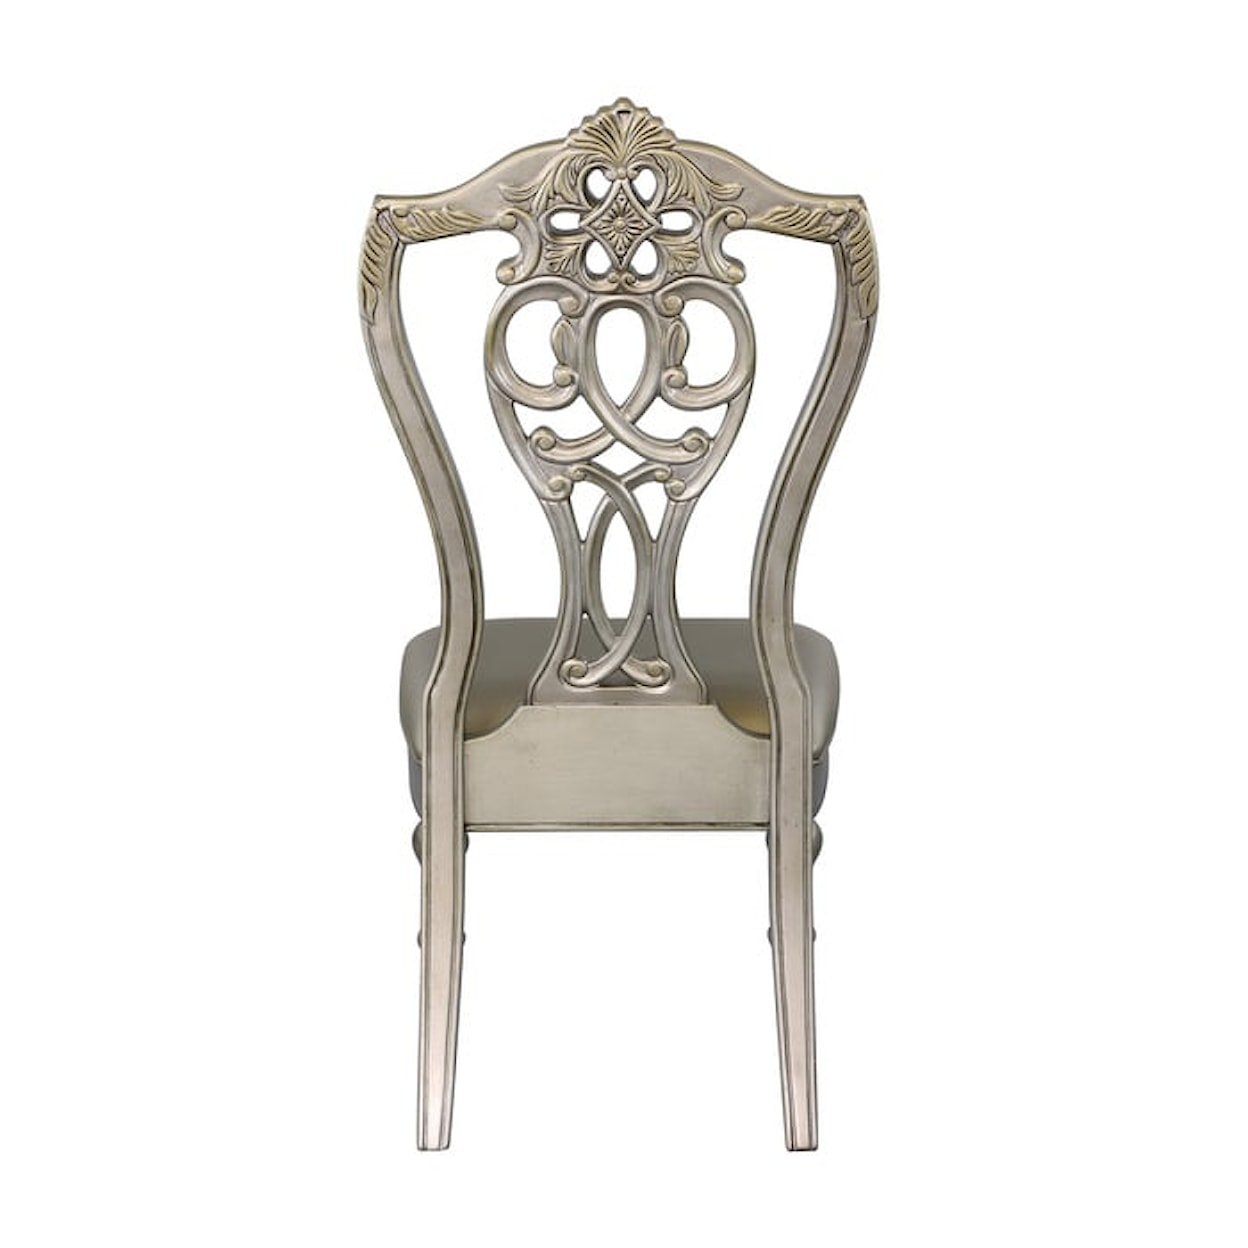 Homelegance Furniture Catalonia Side Chair